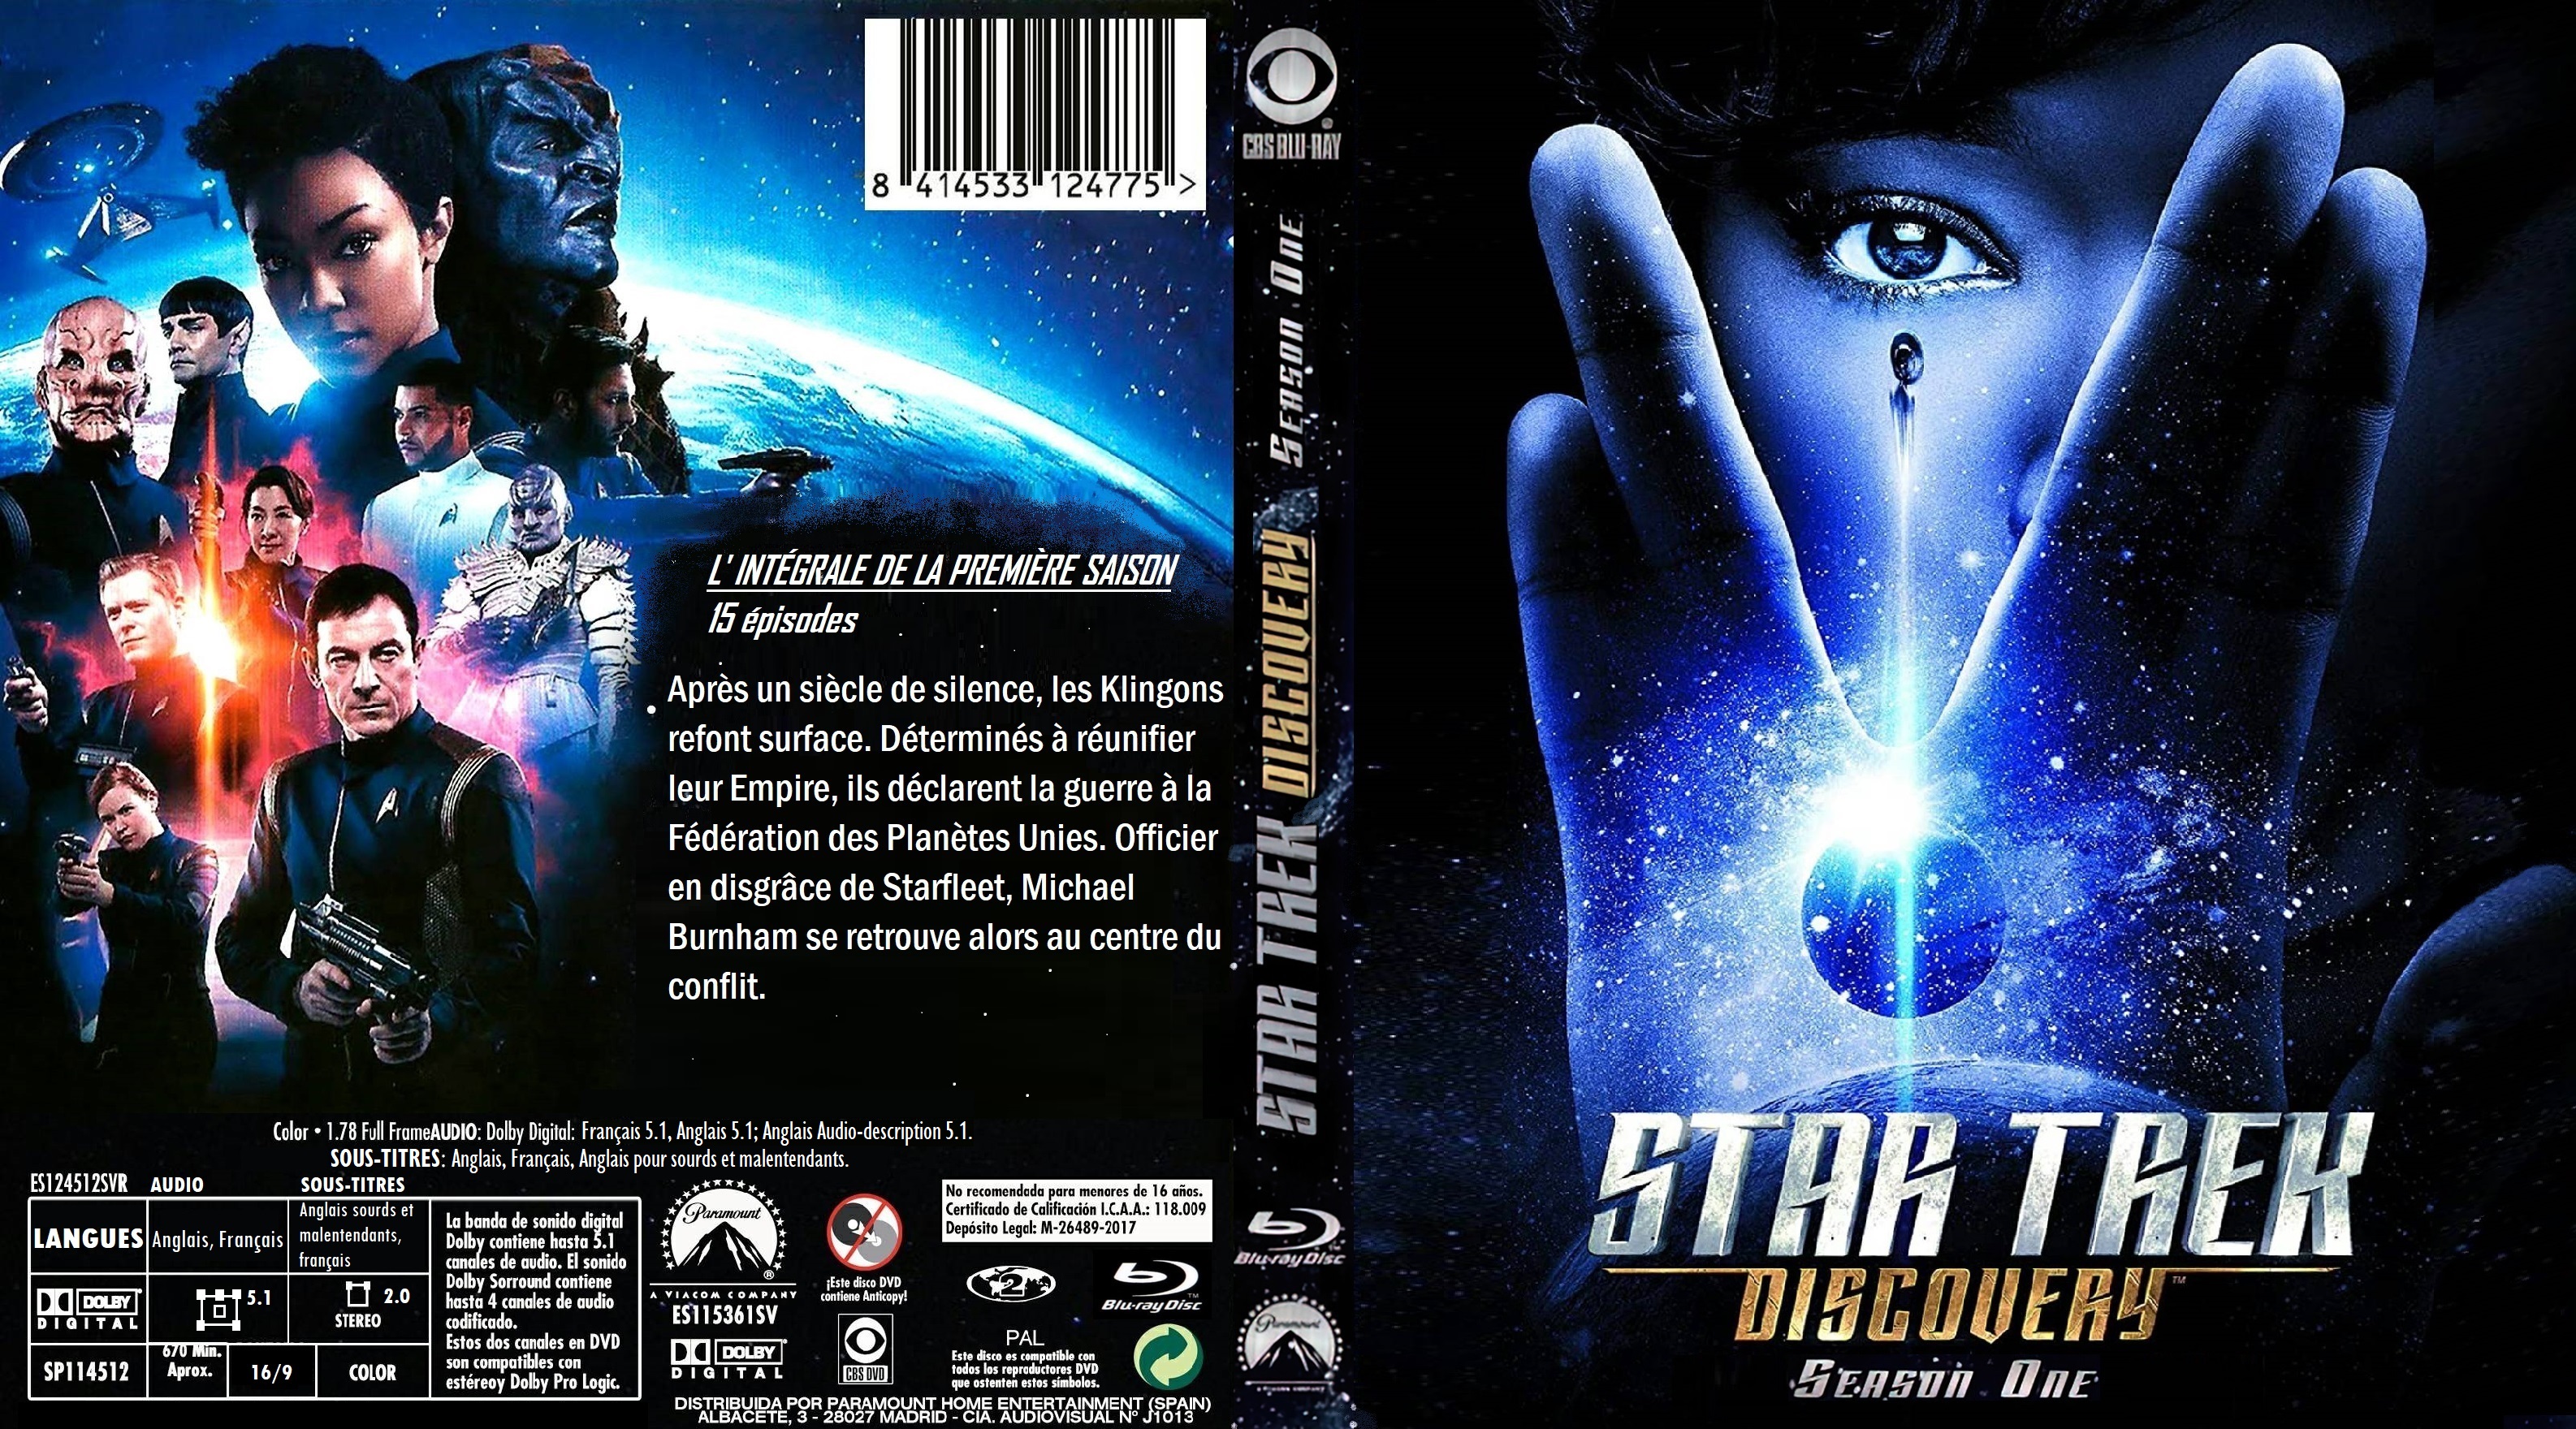 Jaquette DVD Star Trek Discovery Saison 1 custom (BLU-RAY) v2